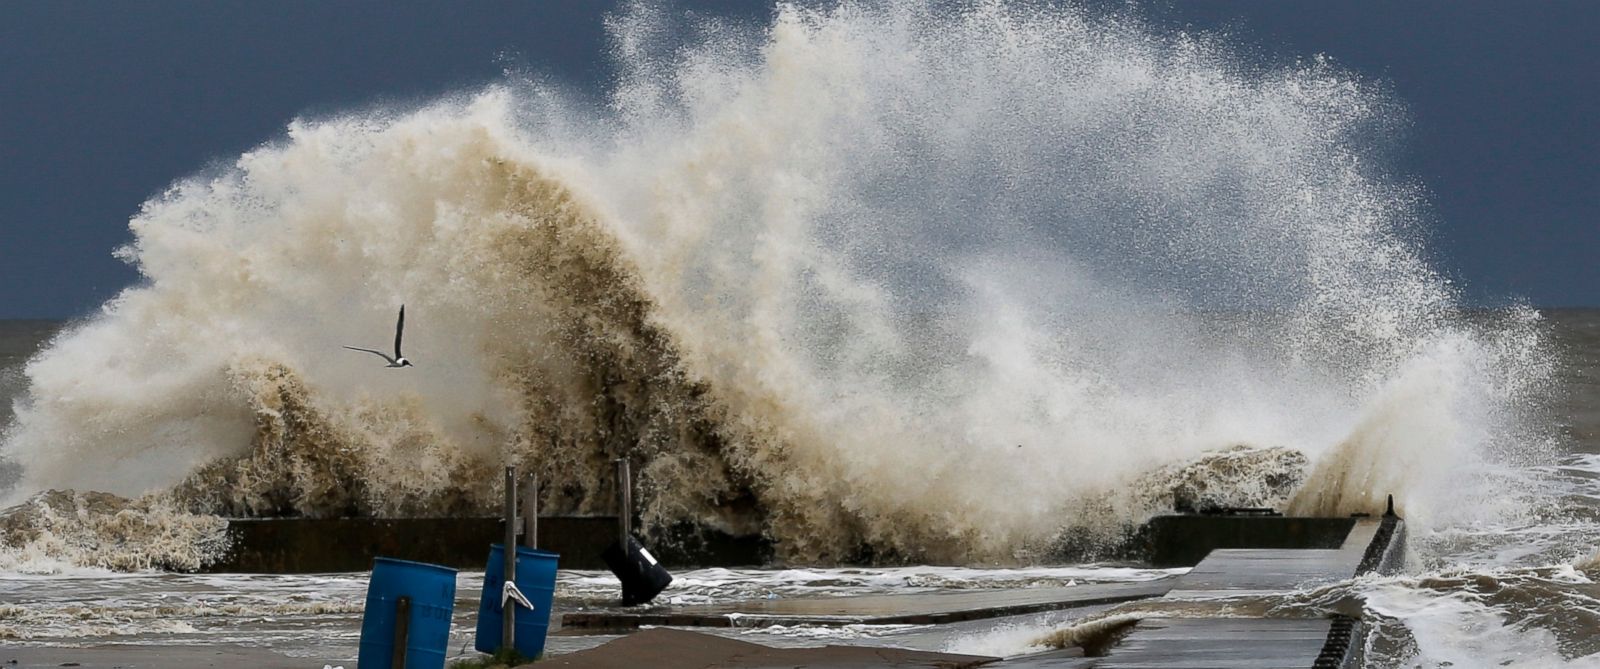 10yearold dead as Tropical Storm Cindy bears down on the Gulf Coast